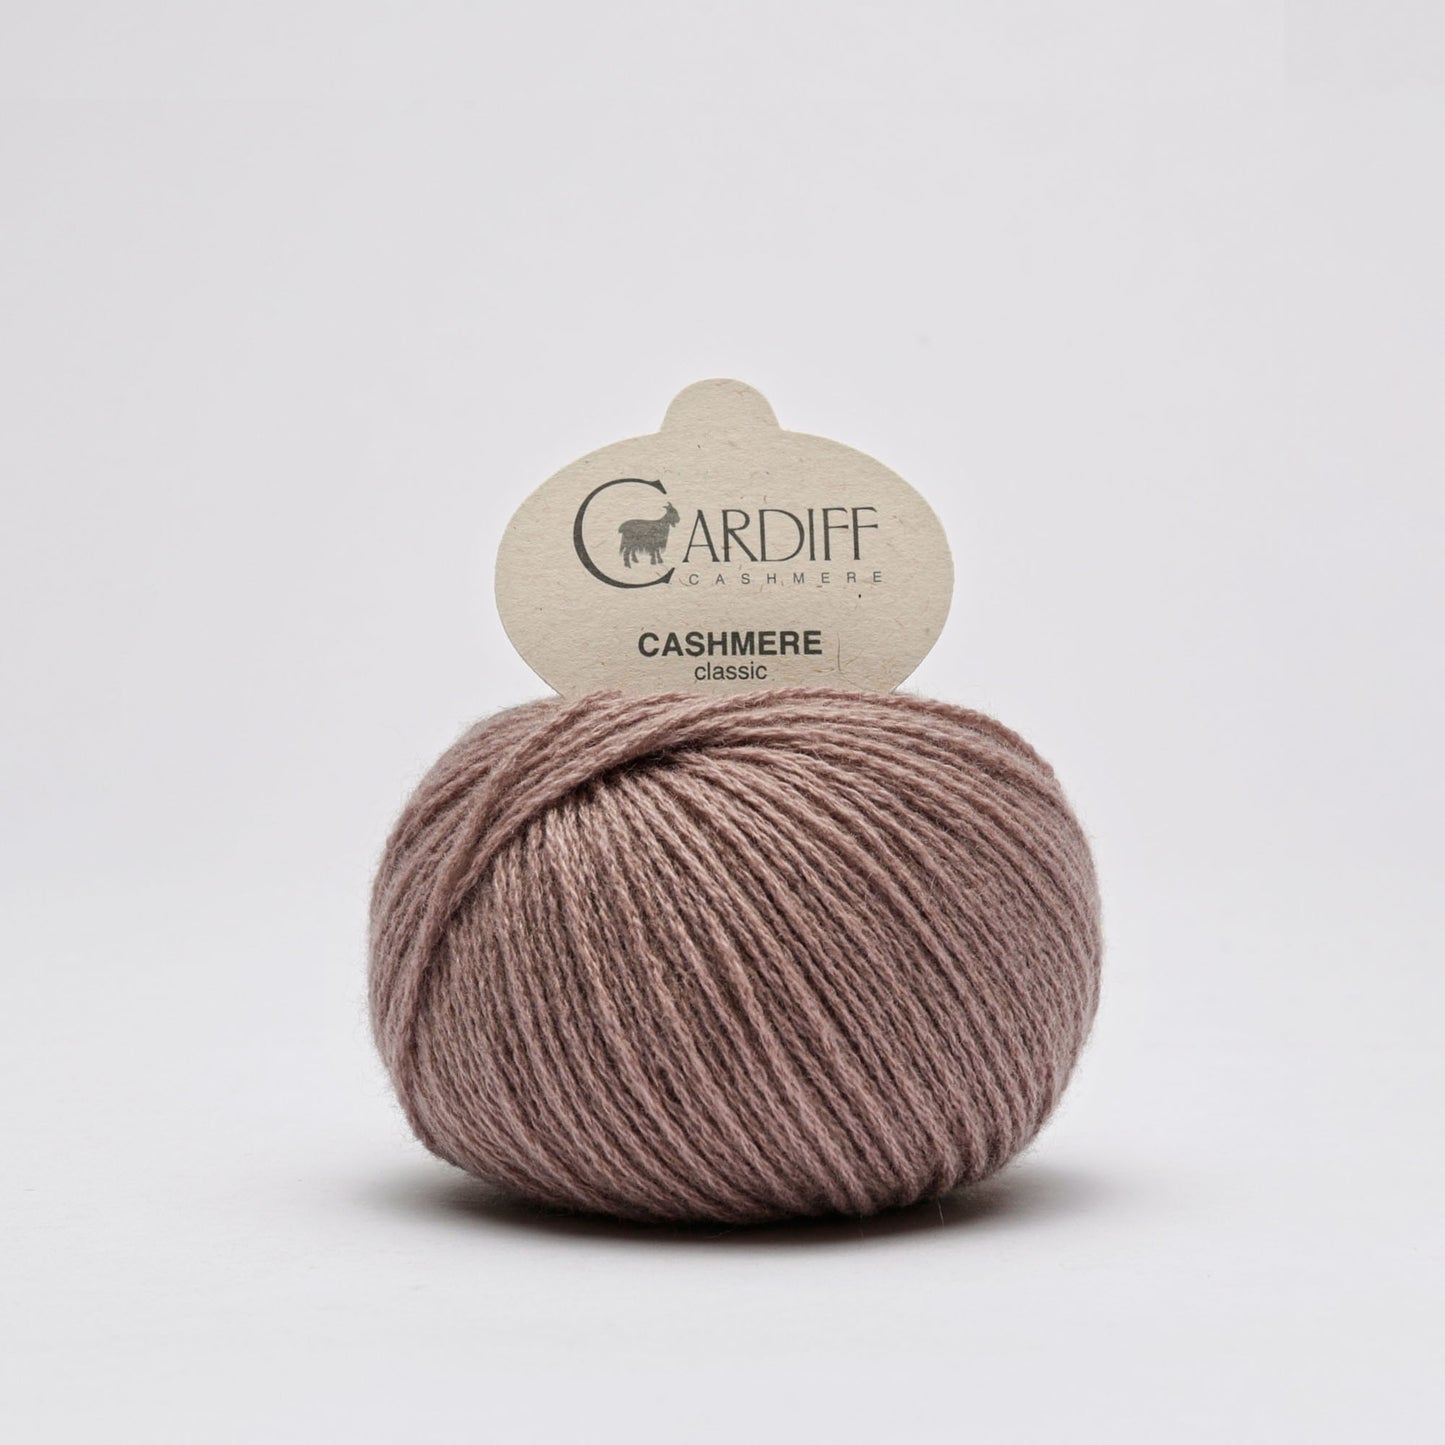 Cardiff CLASSIC gentle yarn, 706, NARA, comp: 100% Cashmere